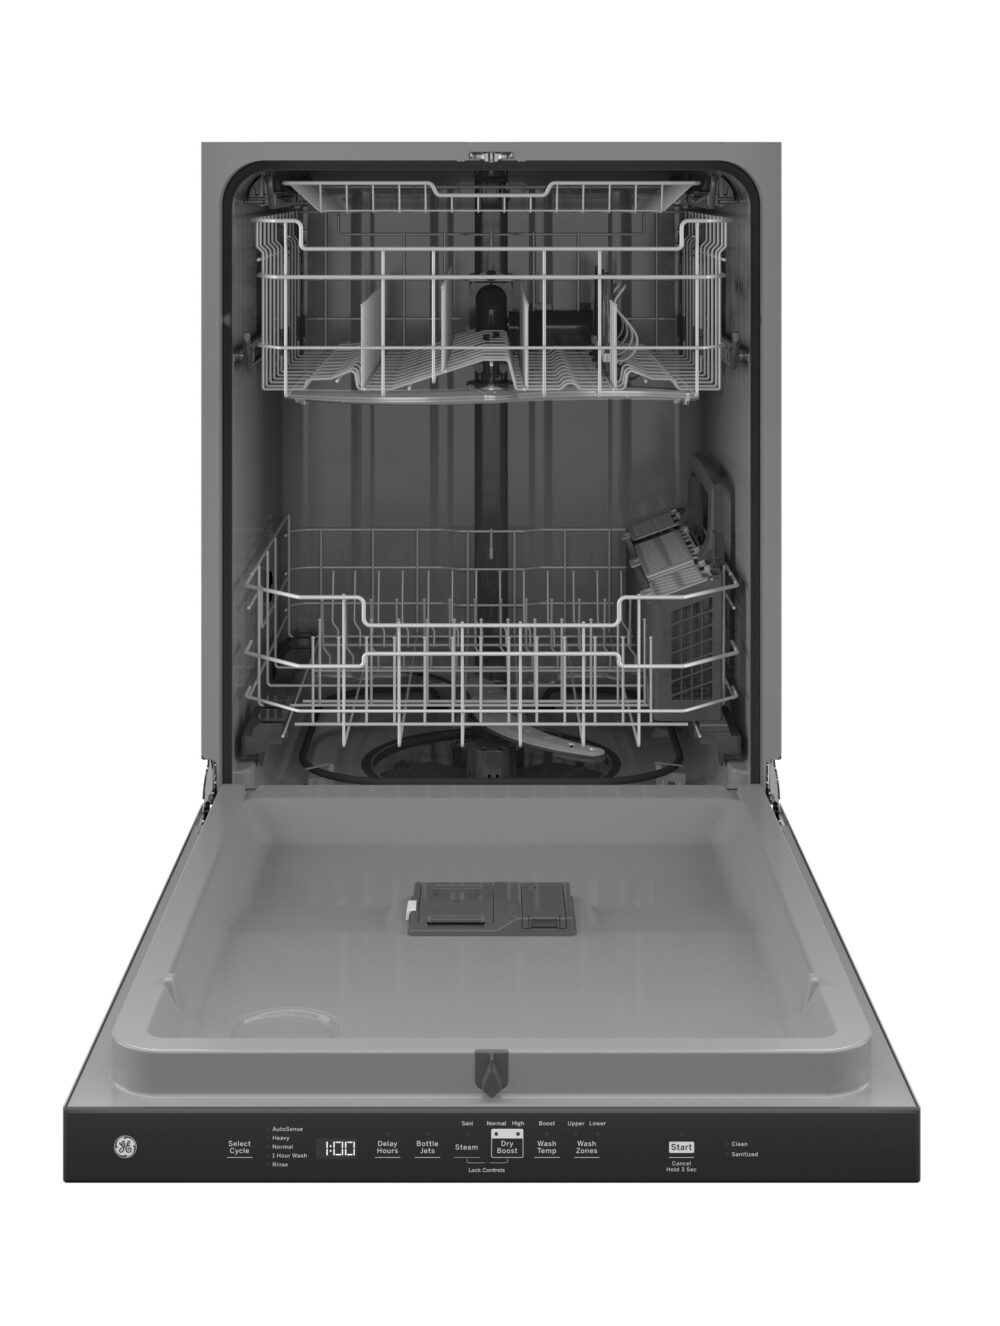 24996 - dishwasher - GDP630PYRFS - open - empty